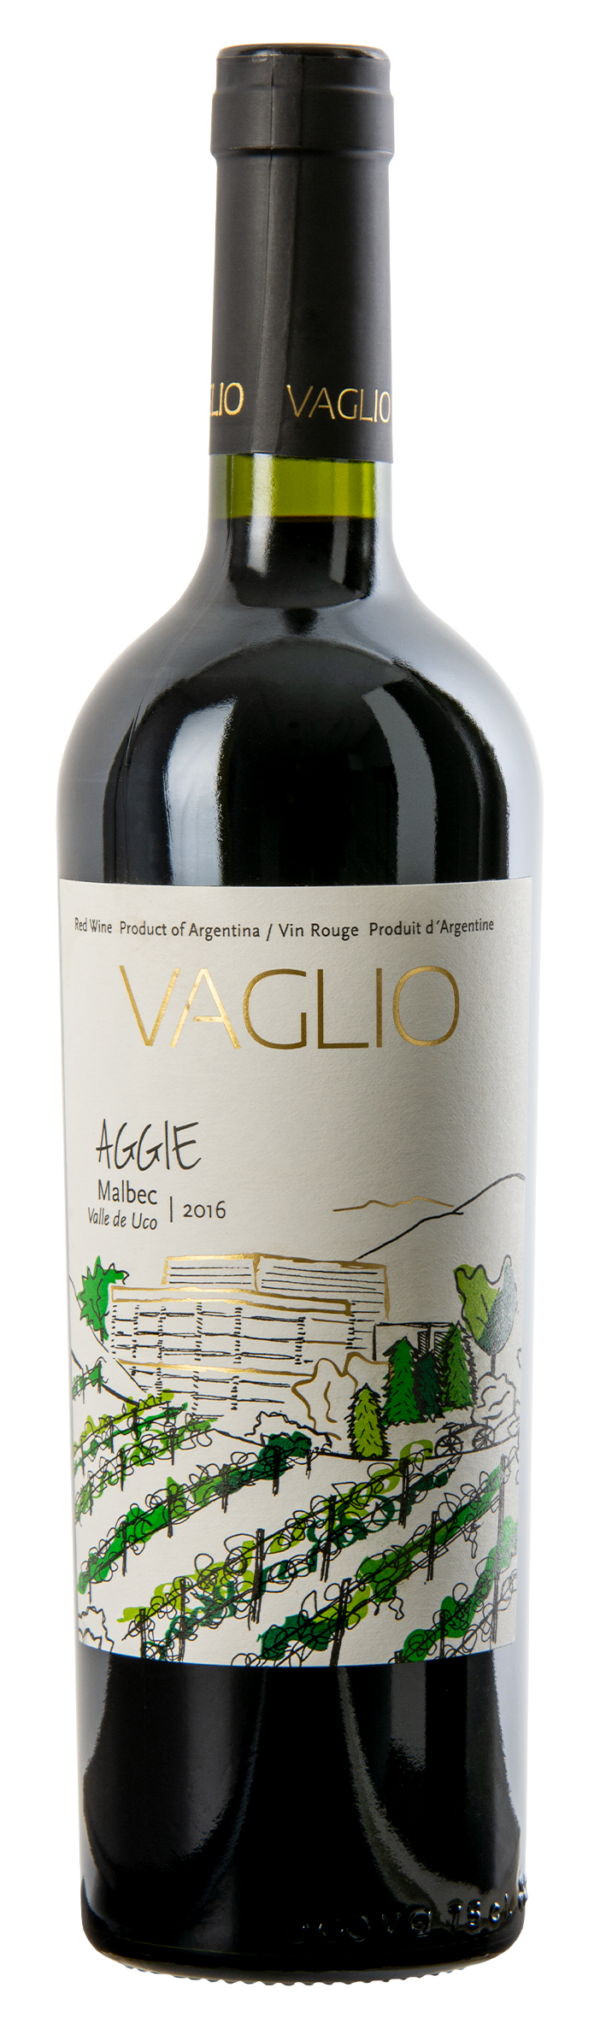 Vagglio Aggie 2016 Malbec Wine bottle